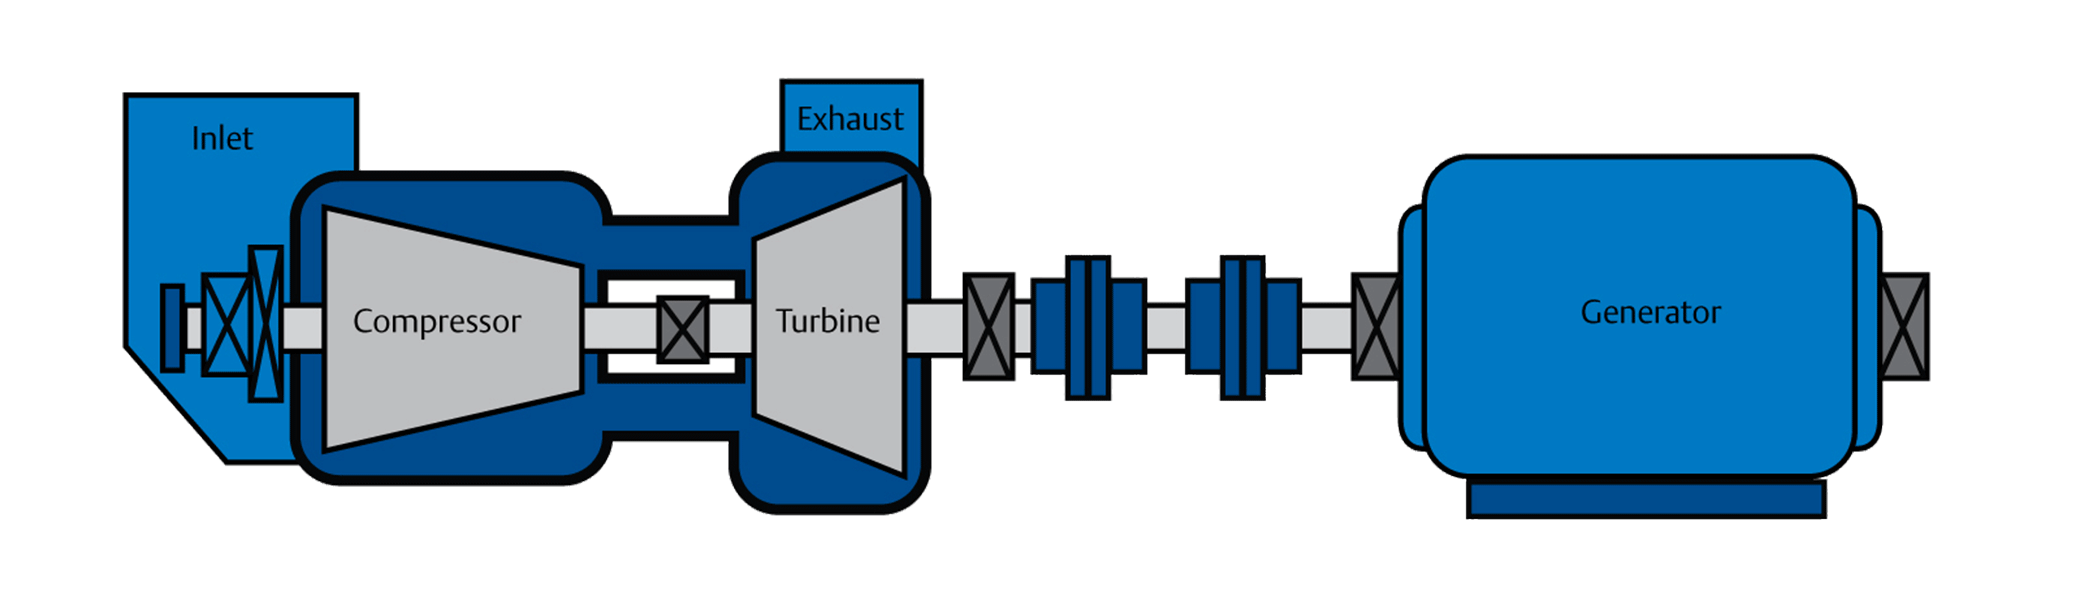 Gas Turbine